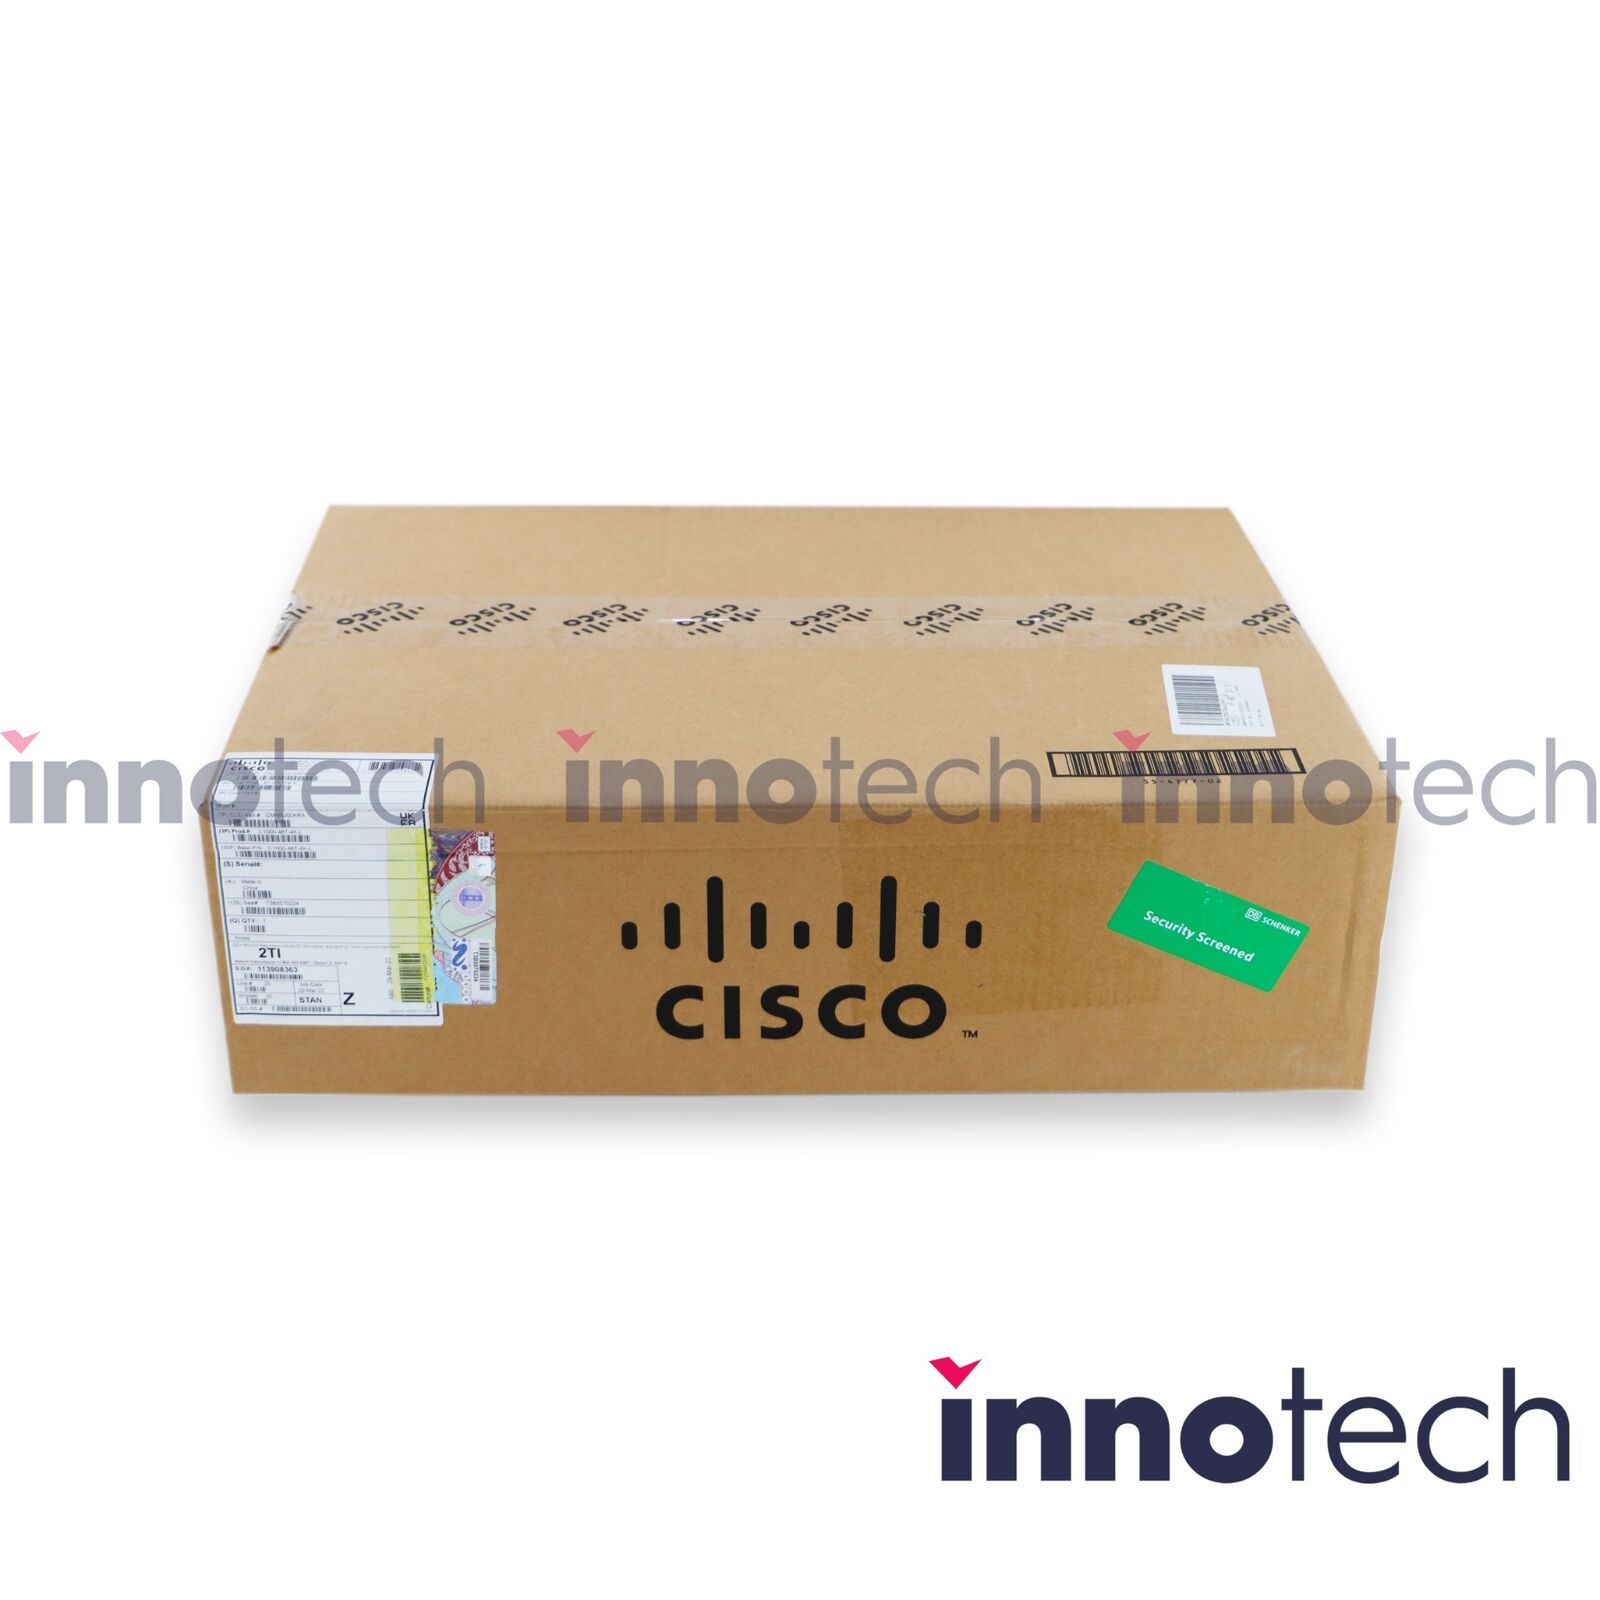 Cisco C1000-48T-4X-L Cisco Catalyst 1000 Switch 48 Ports New Sealed